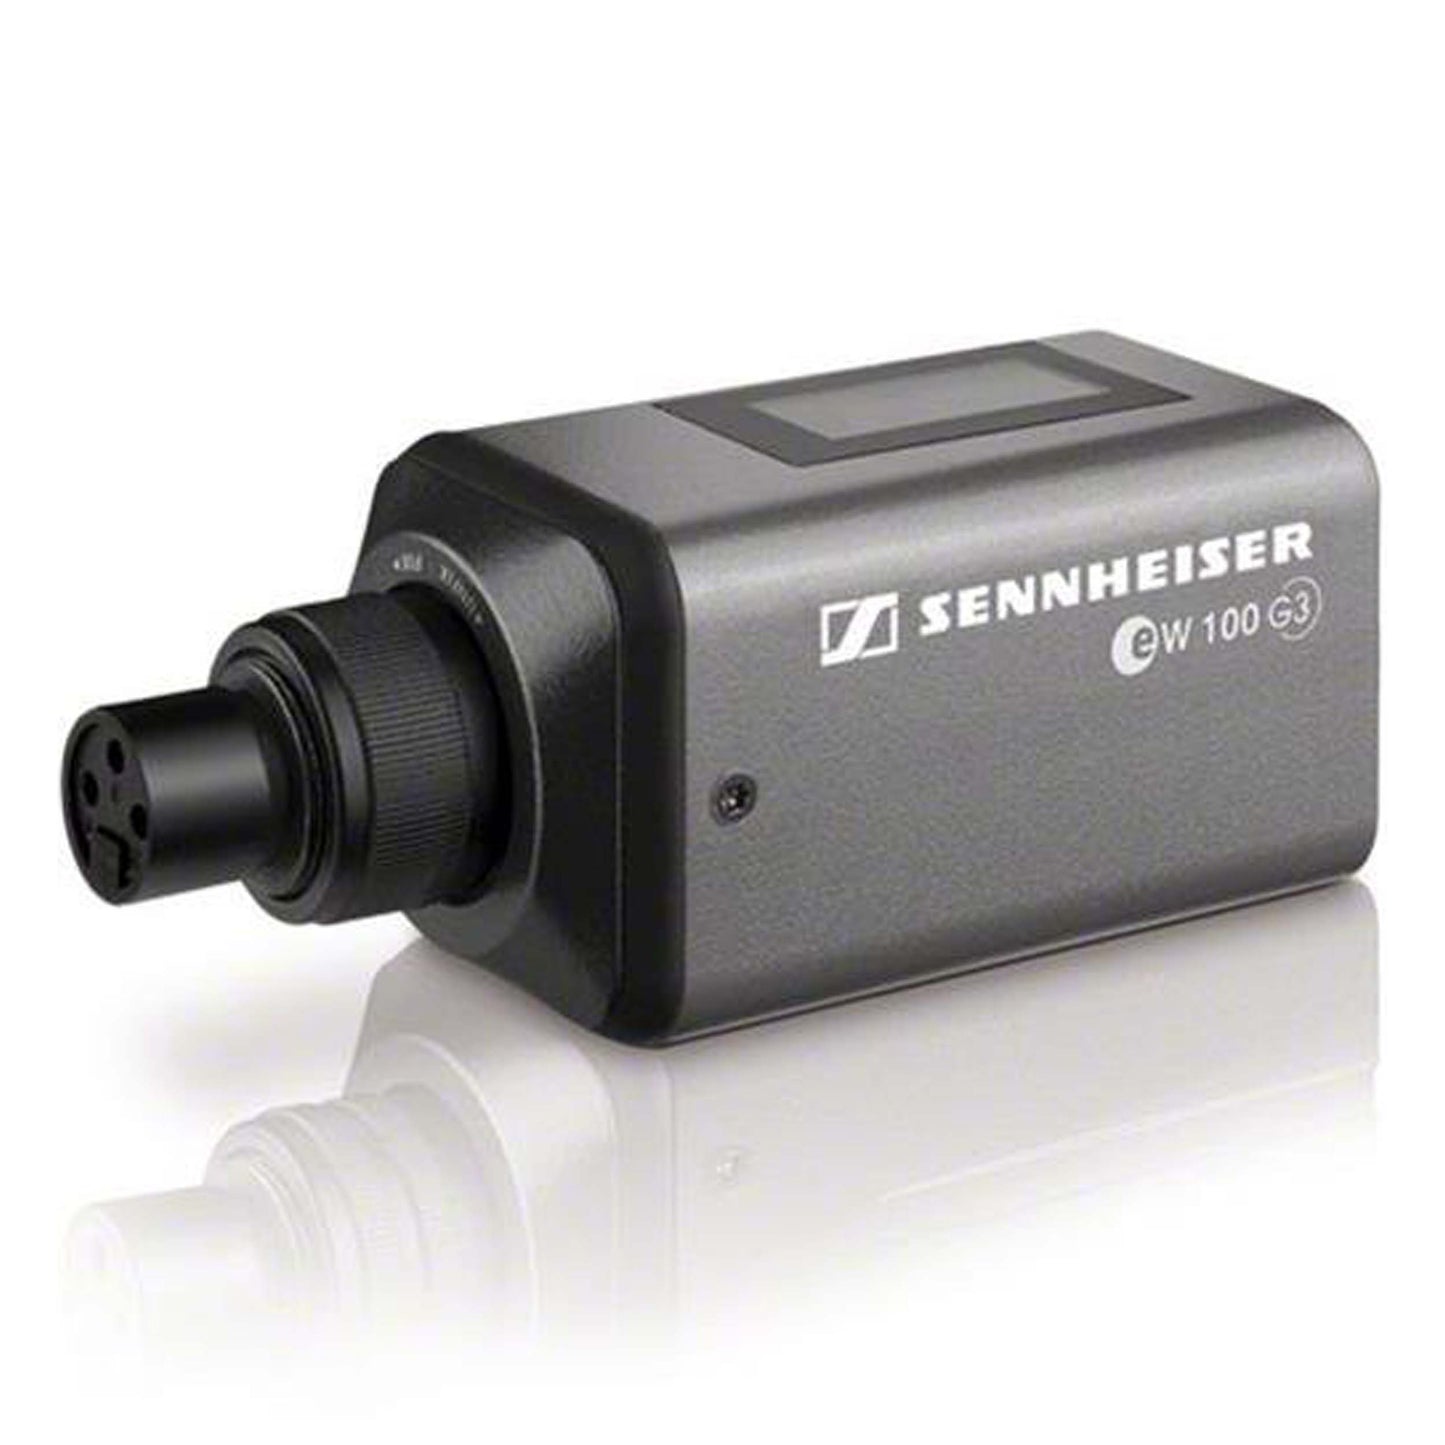 Sennheiser SKP 100 G3 Plug-On Transmitter for Dynamic Mics - A1 (470-516 MHz) (SKP100G3A1)